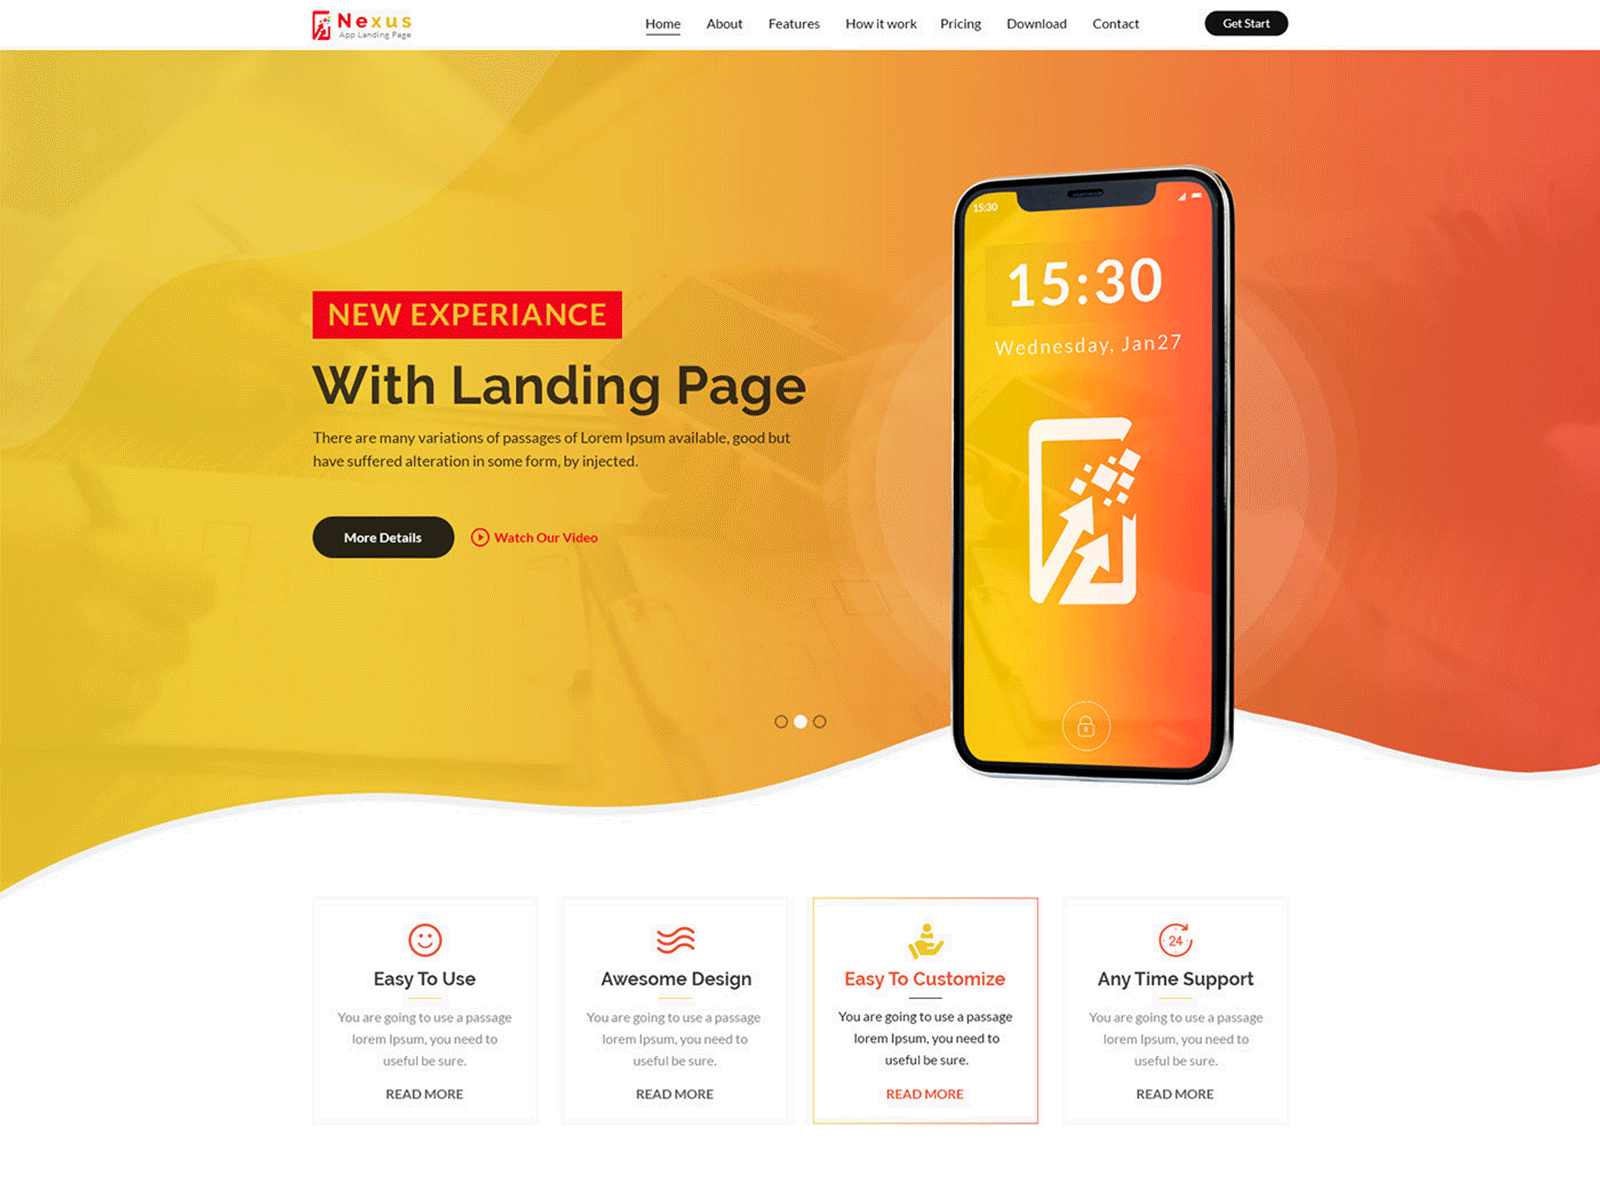 mobile-app-landing-page-ui-design-by-ansal-mahajan-on-dribbble